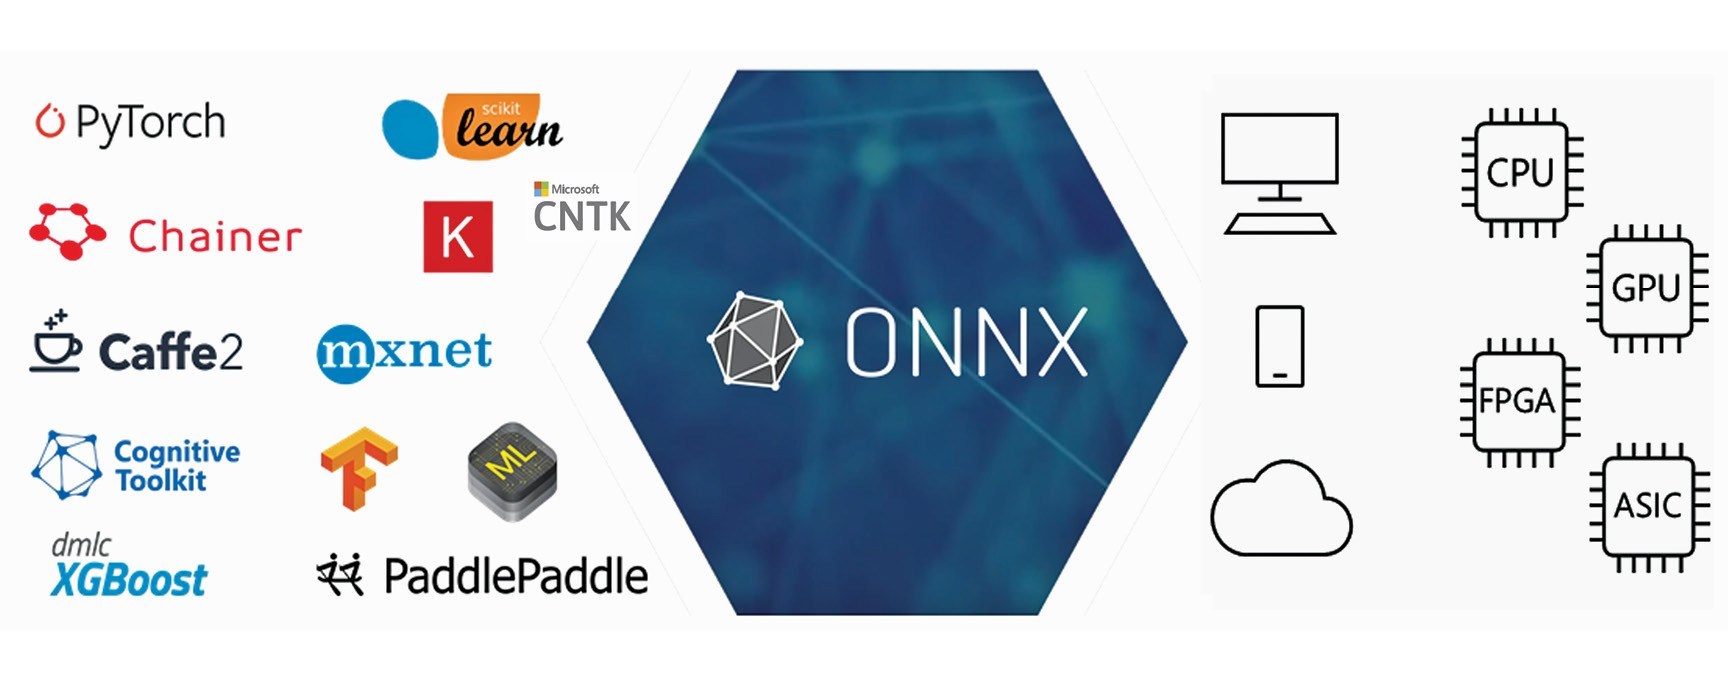 Onnx Convert Trained Pytorch Model To Tensorflow Model Qian Qu 